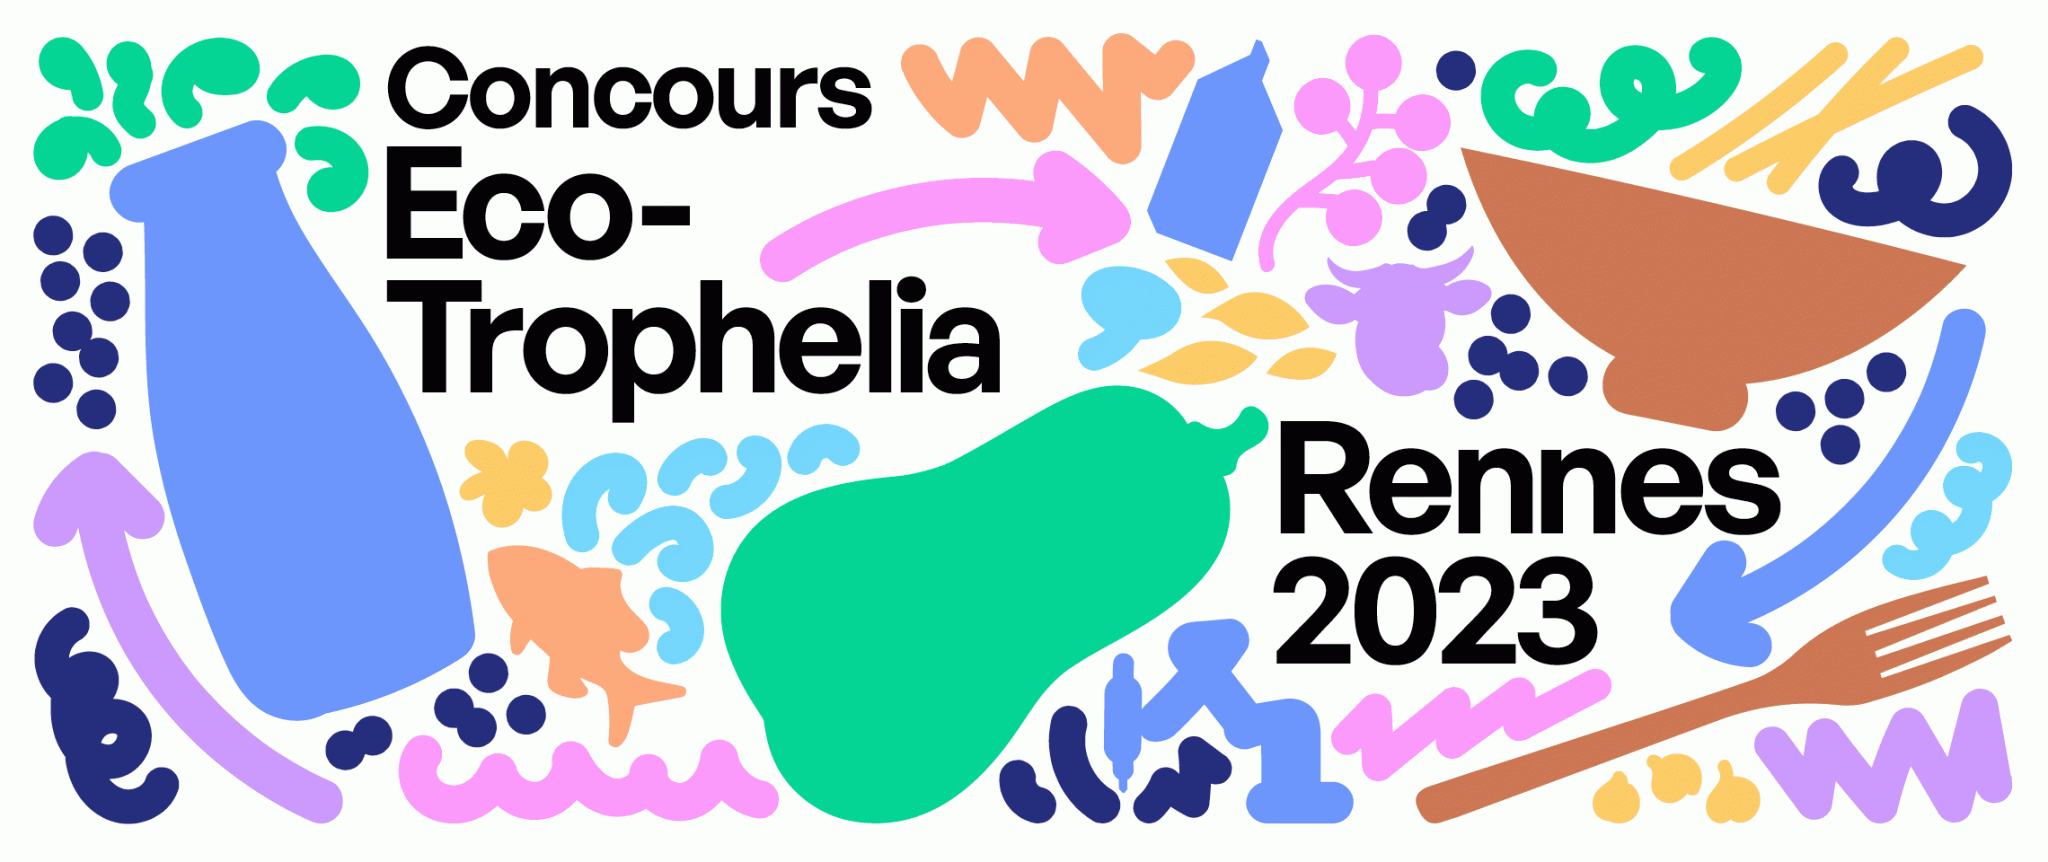 Concours Ecotrophelia, Rennes 2023